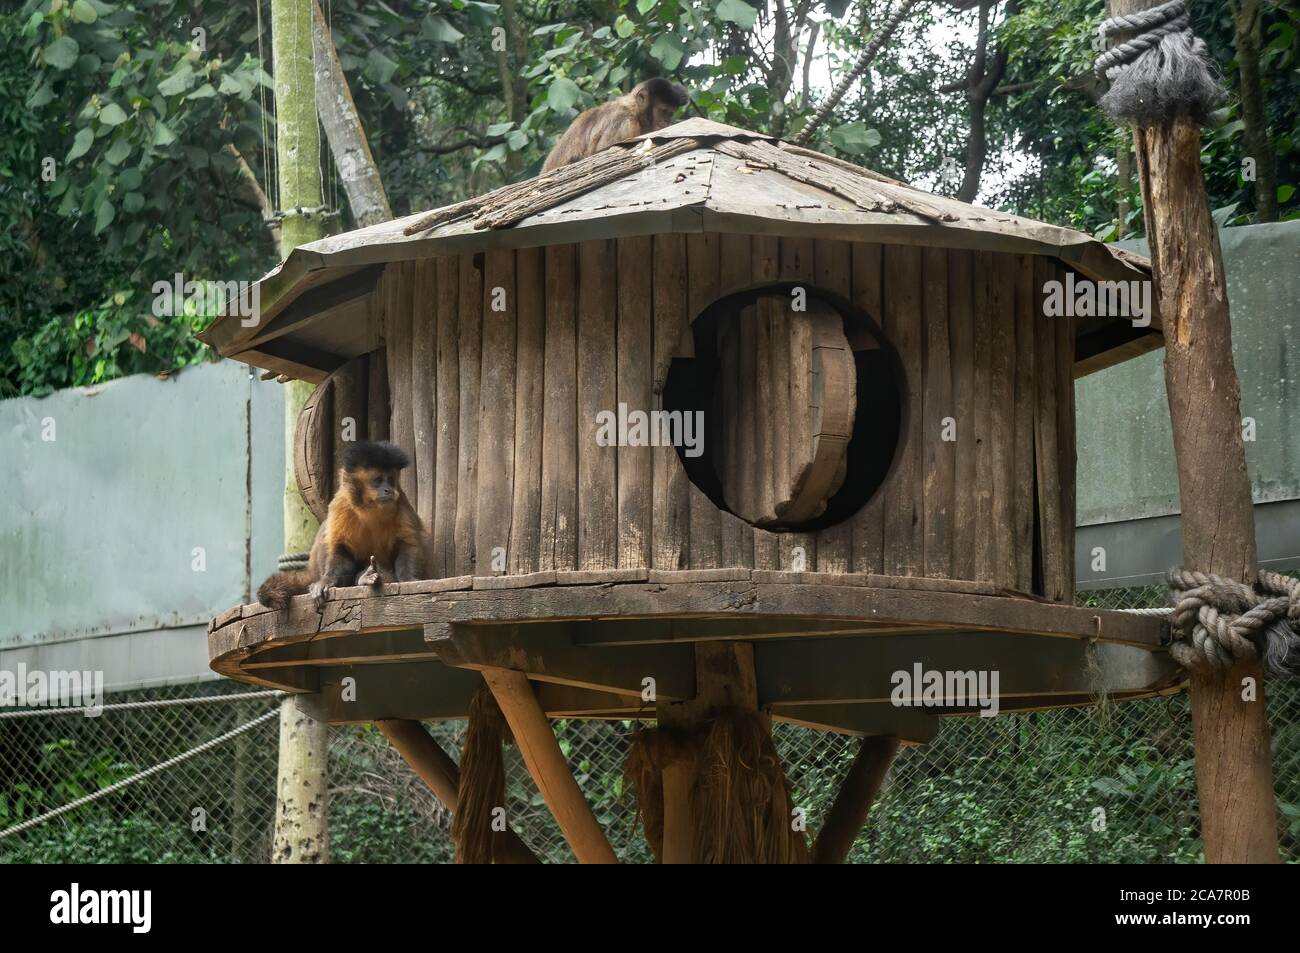 A shelter for Black-striped capuchin (Sapajus libidinosus - a capuchin monkey from South America) inside monkey preservation area in Zoo Safari park. Stock Photo